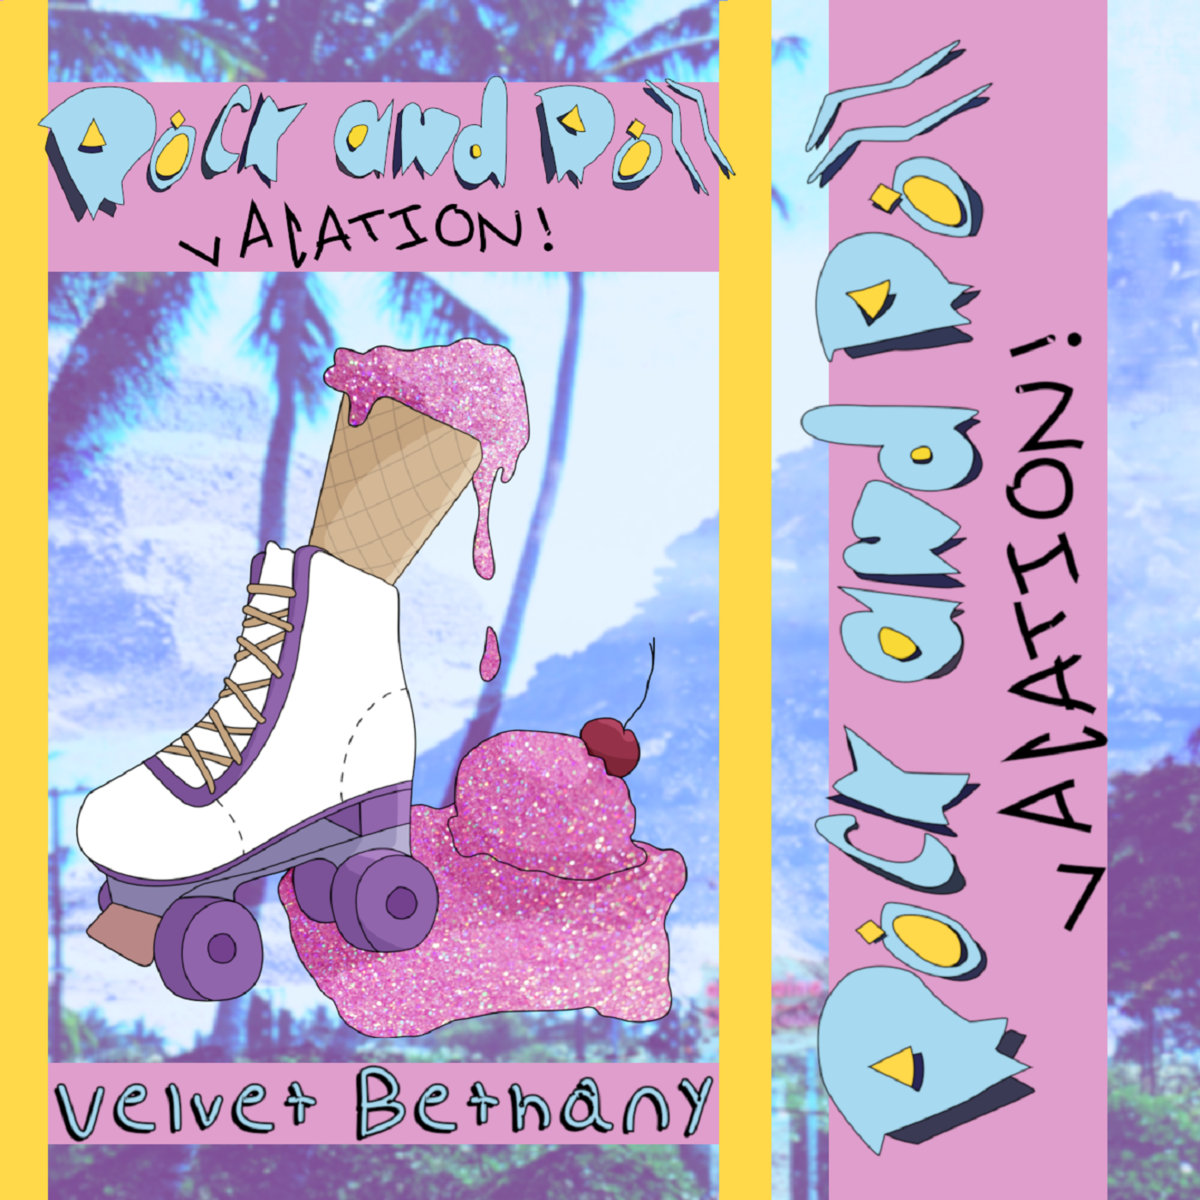 Velvet Bethany – Rock & Roll Vacation!